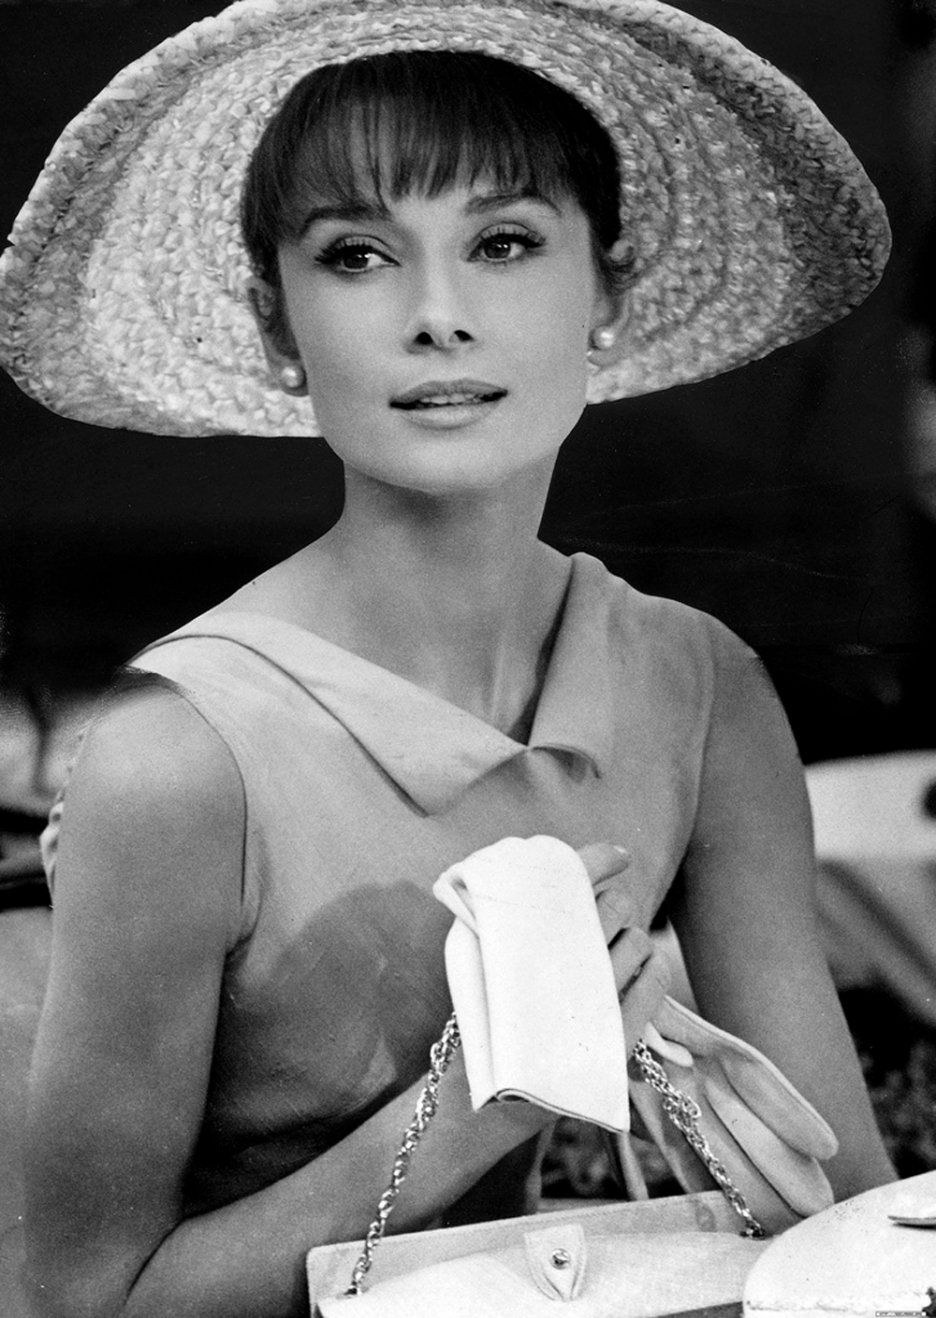 ALL GOOD THINGS: Happy Birthday Audrey Hepburn!